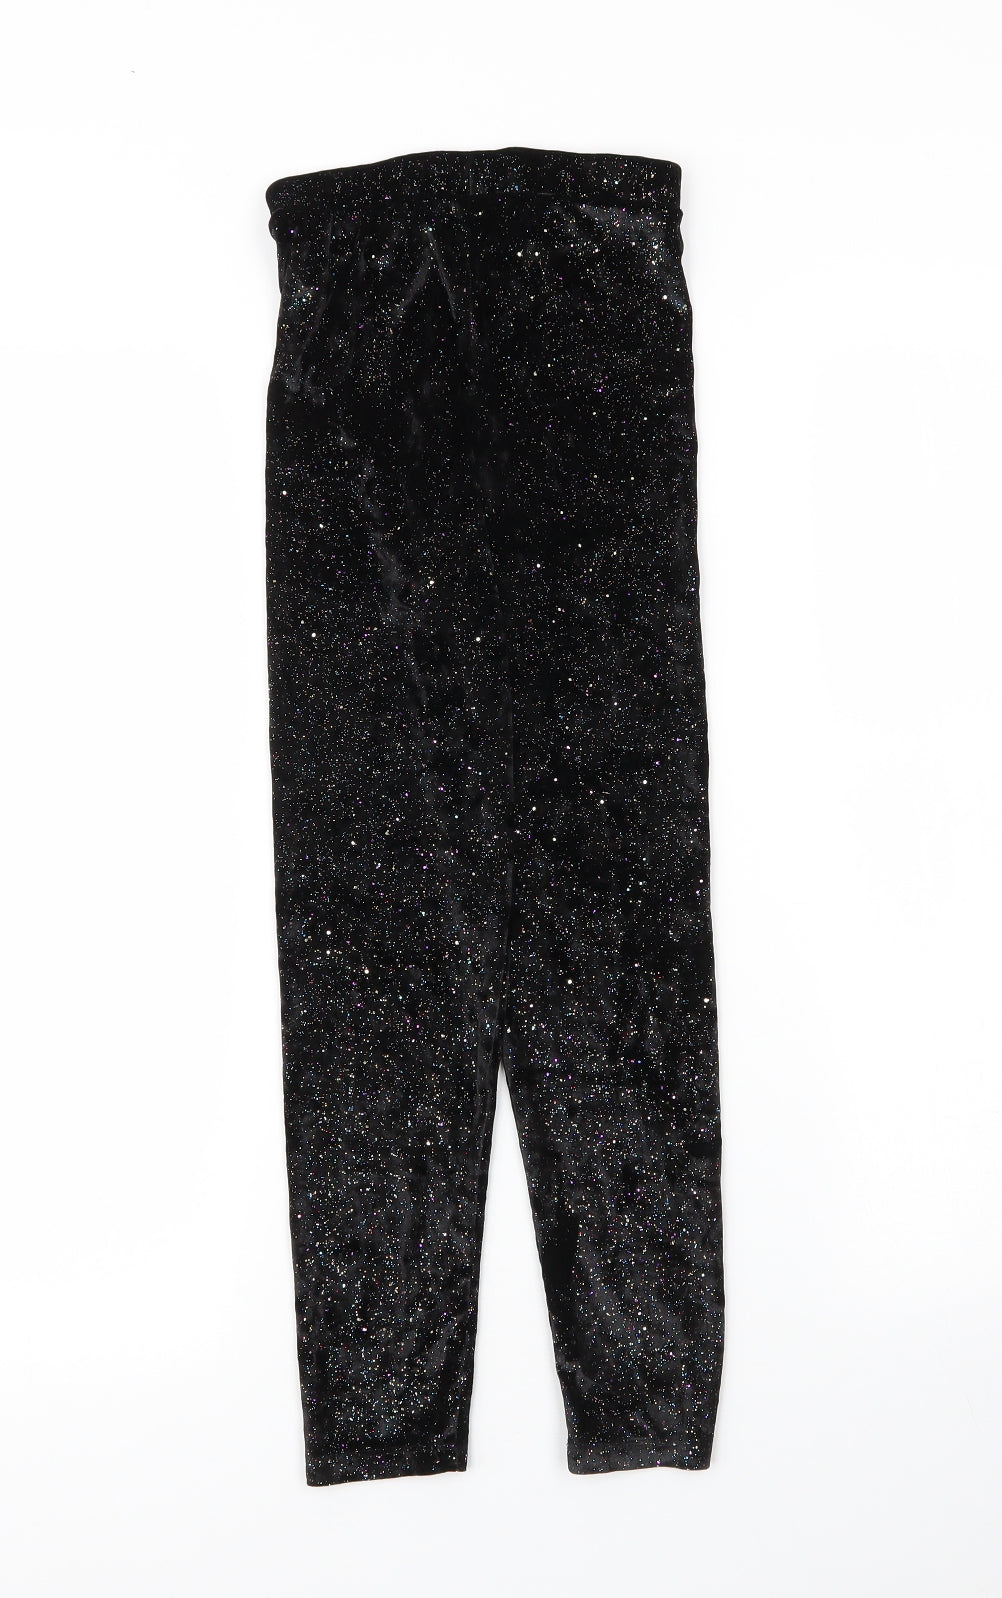 Matalan Girls Black  Polyester Carrot Trousers Size 9 Months L21.5 in Regular